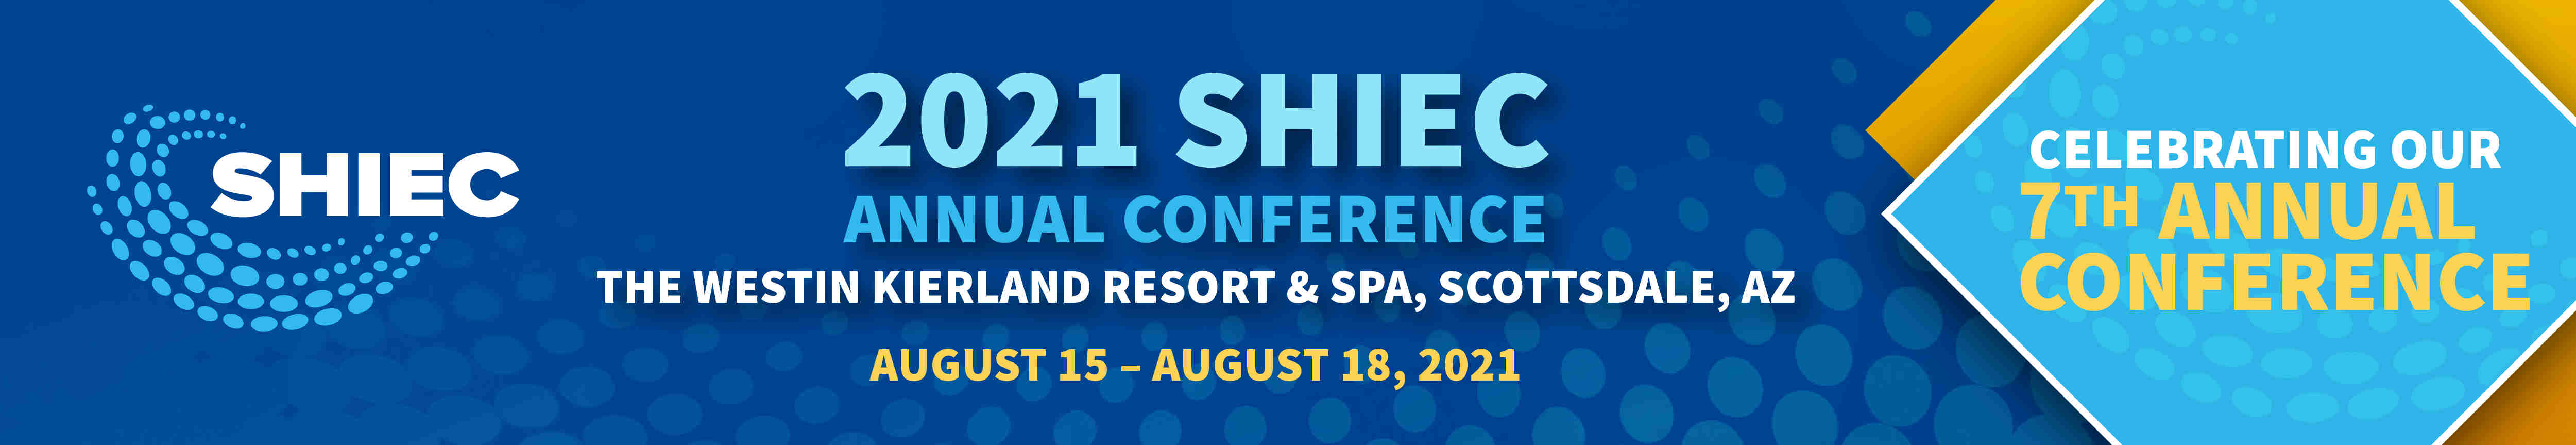 SHIEC 2021 Annual Conference – Strategic Health Information Exchange Collaborative (SHIEC)